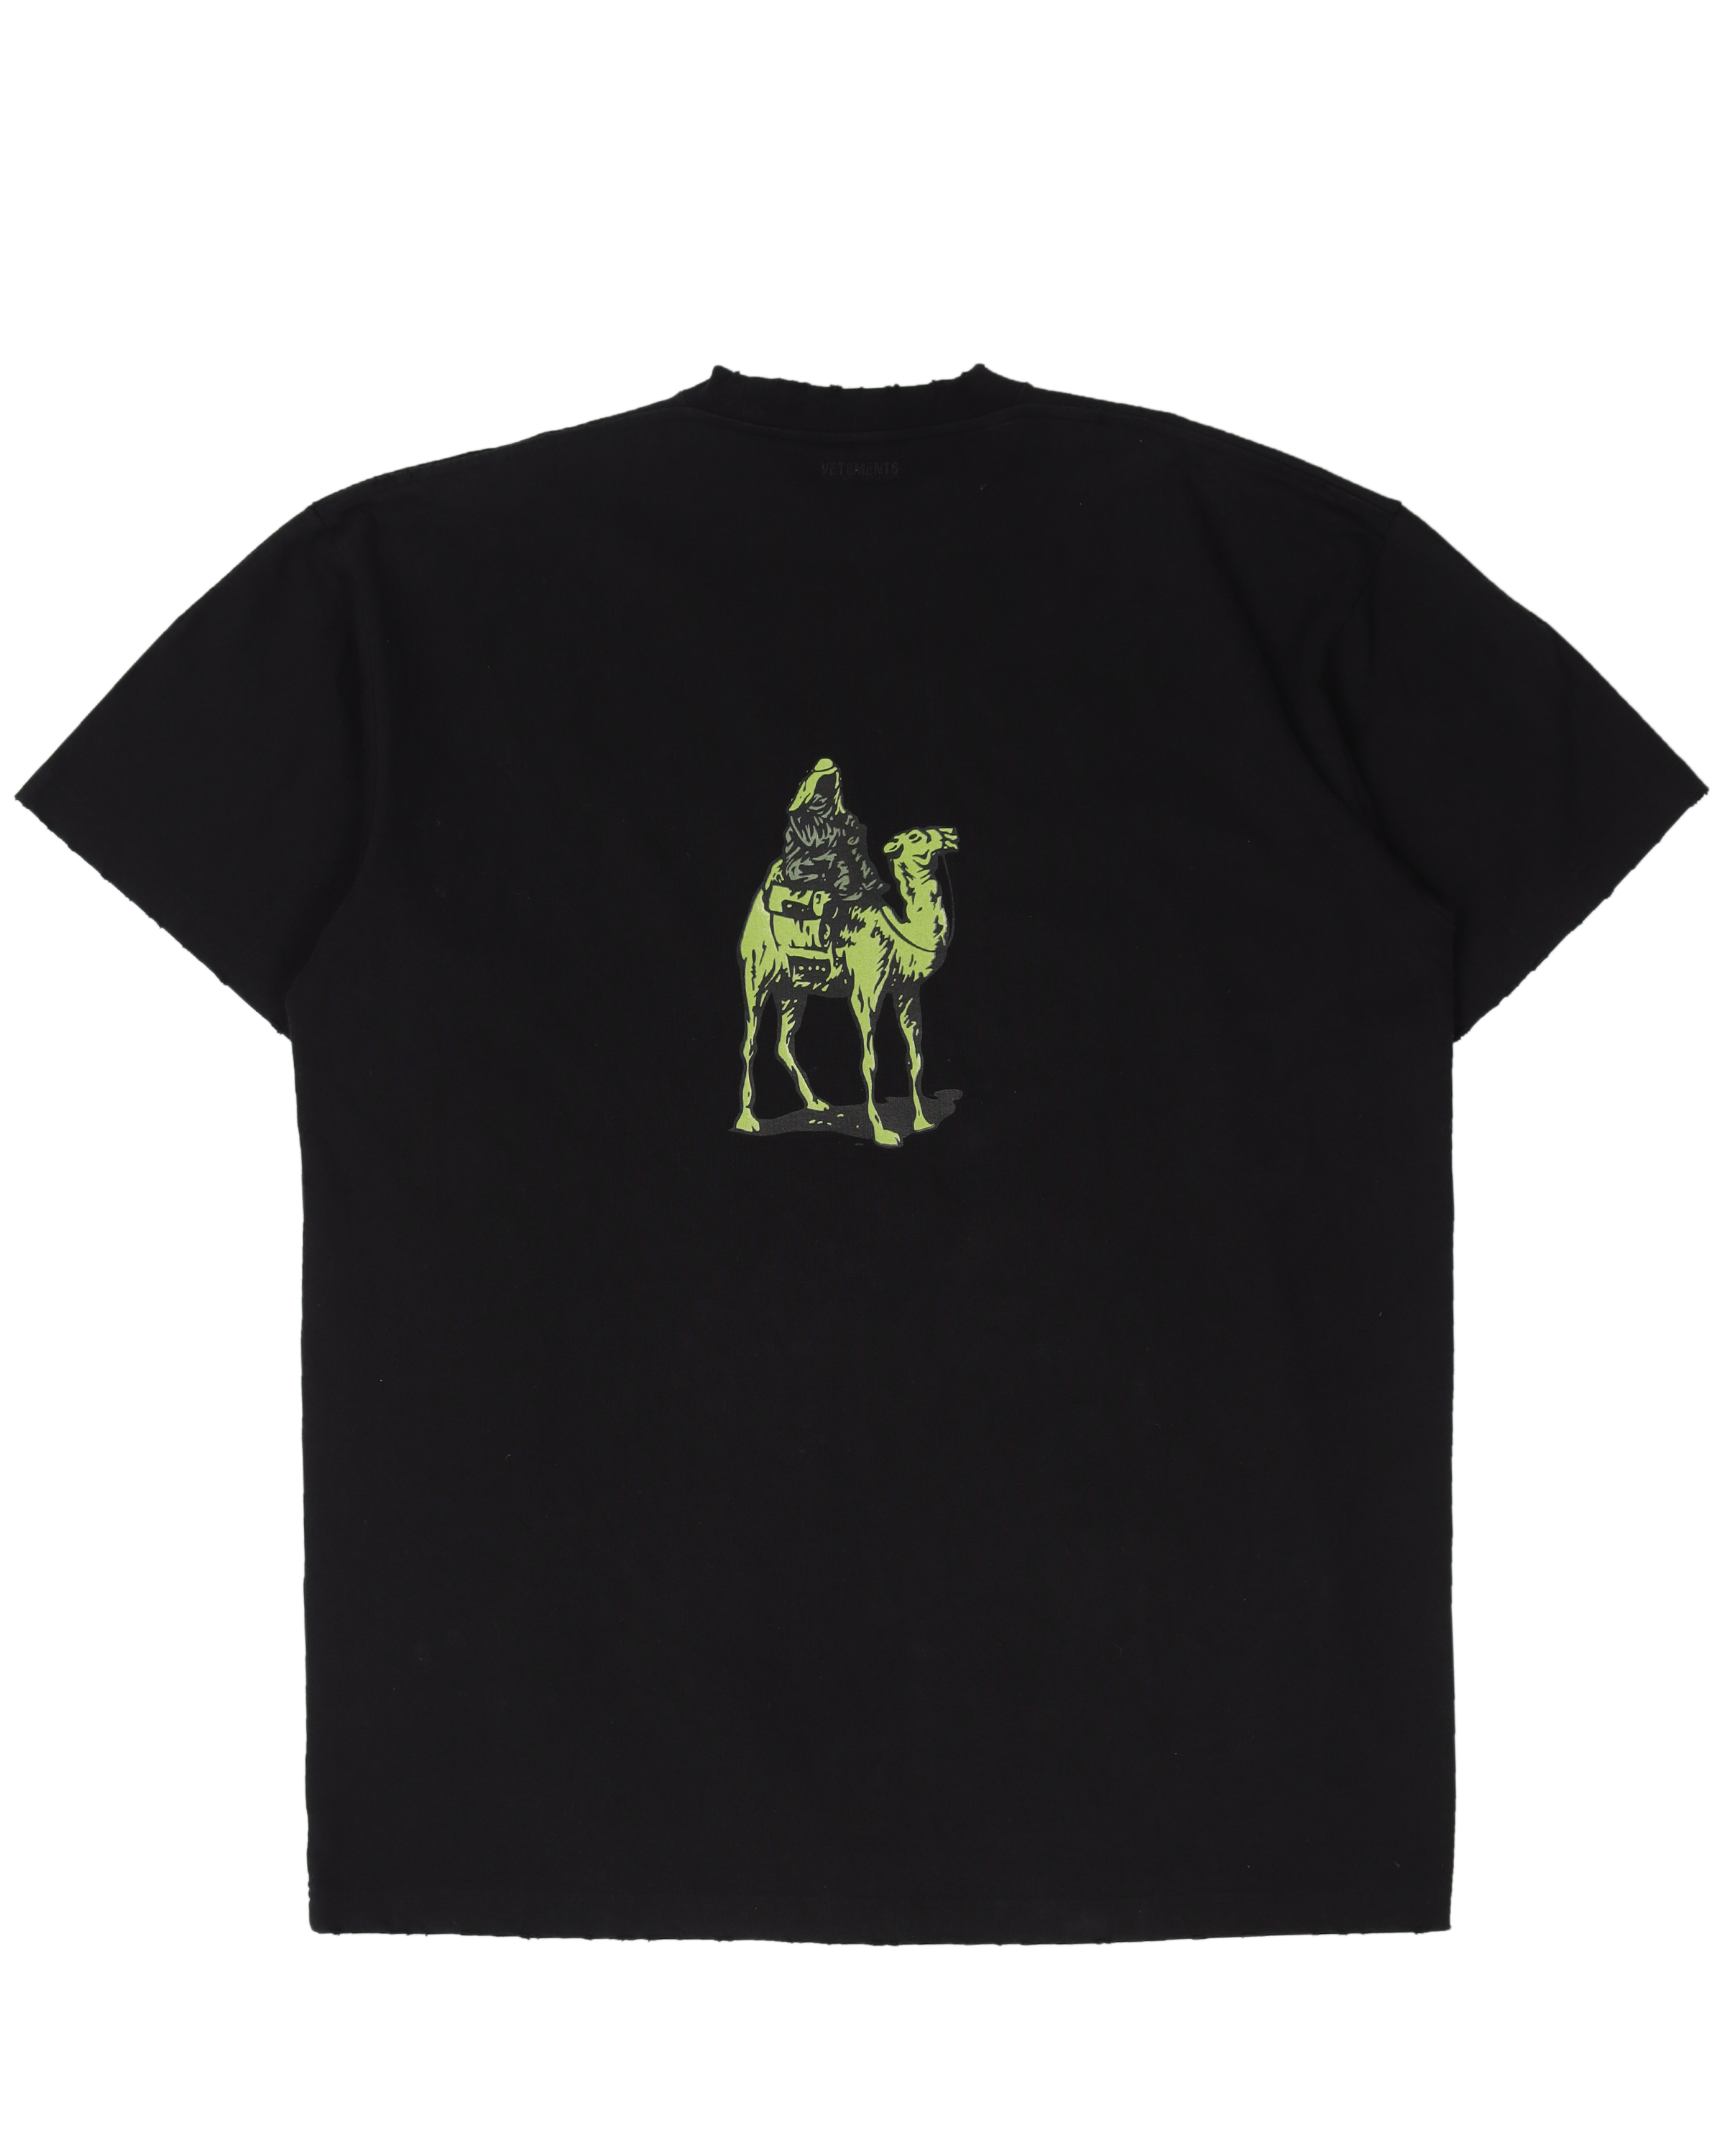 FW20 Silk Road Distressed T-Shirt